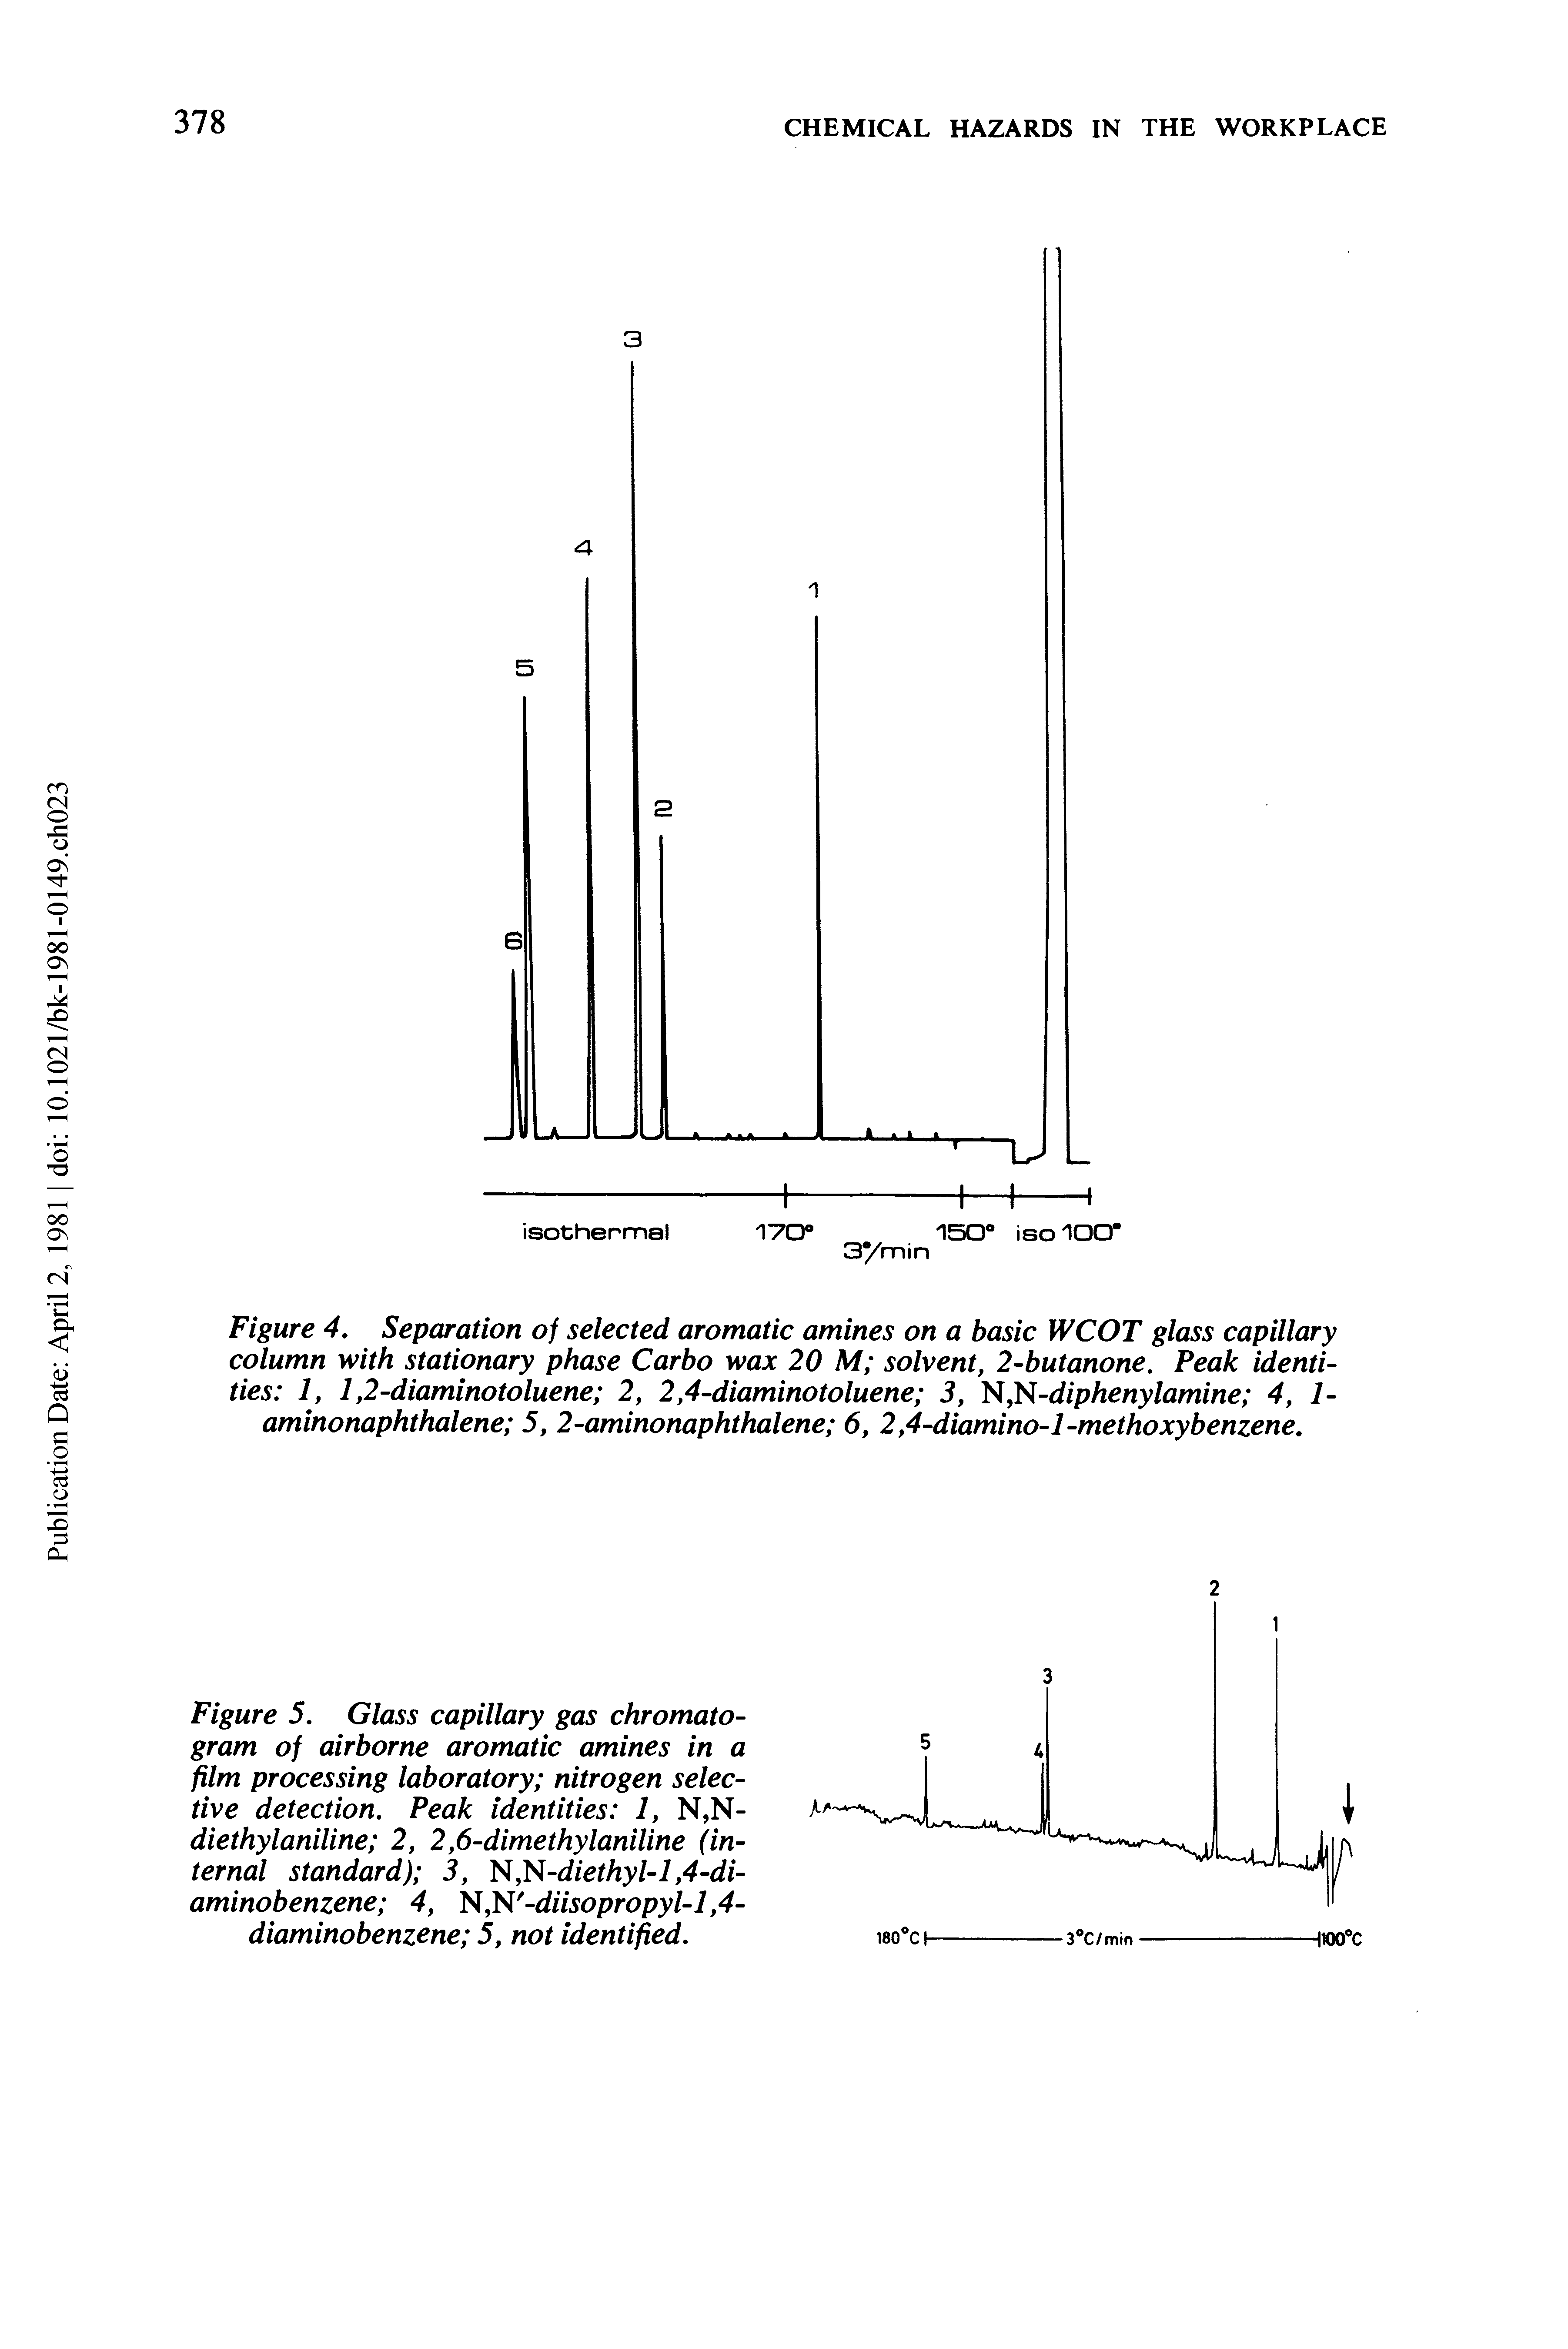 Figure 5. Glass capillary gas chromatogram of airborne aromatic amines in a film processing laboratory nitrogen selective detection. Peak identities 1, N,N-diethylaniline 2, 2,6-dimethylaniline (internal standard) 3, N,N-diethyl-1,4-di-aminobenzene 4, N,N -diisopropyl-1,4-diaminobenzene 5, not identified.